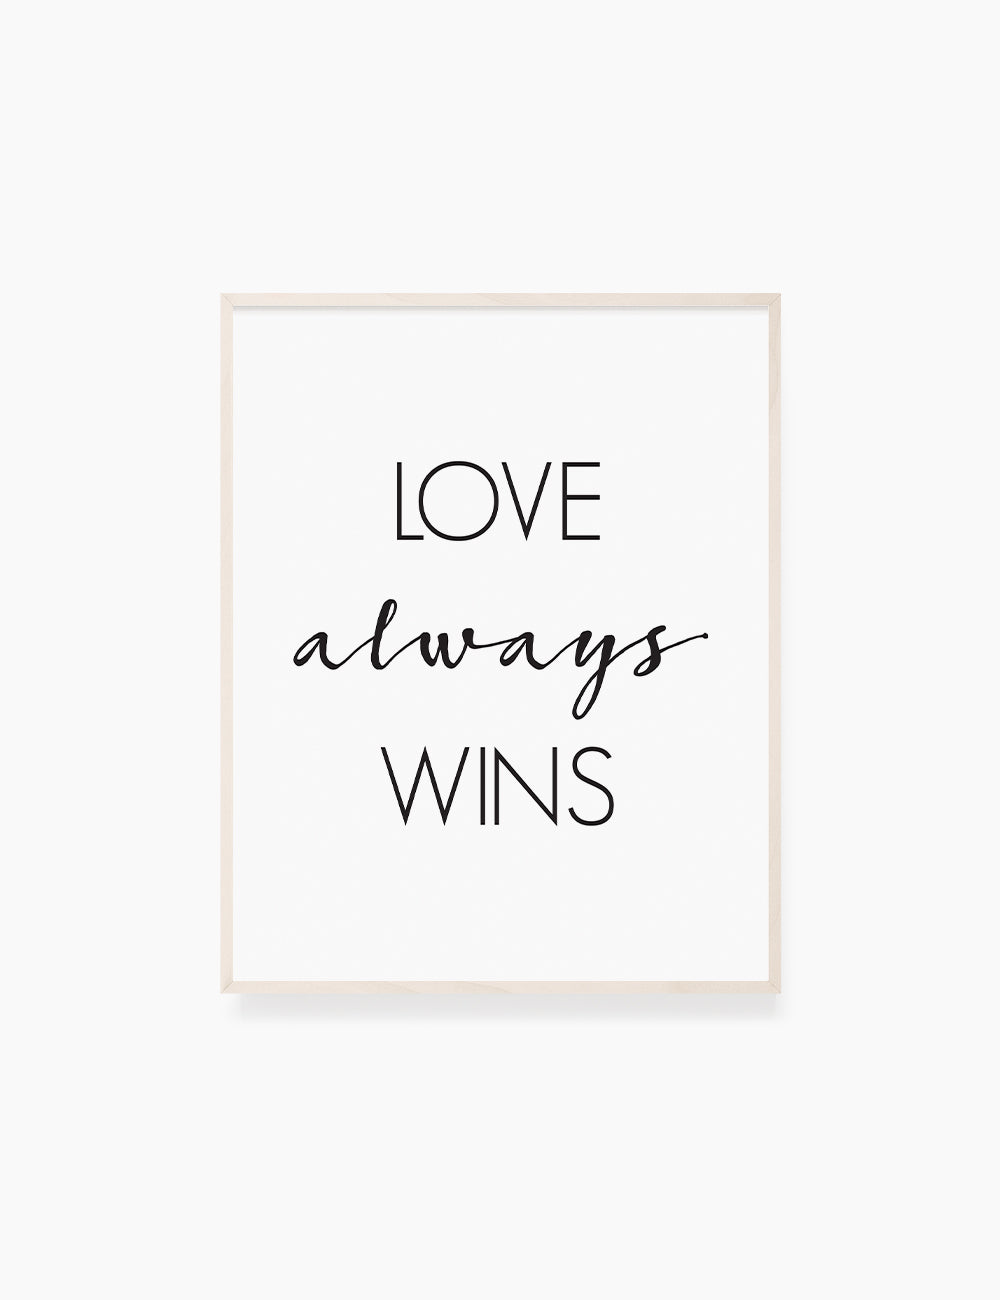 Printable Wall Art Quote: LOVE ALWAYS WINS Printable Poster. WA027 - Paper Moon Art & Design